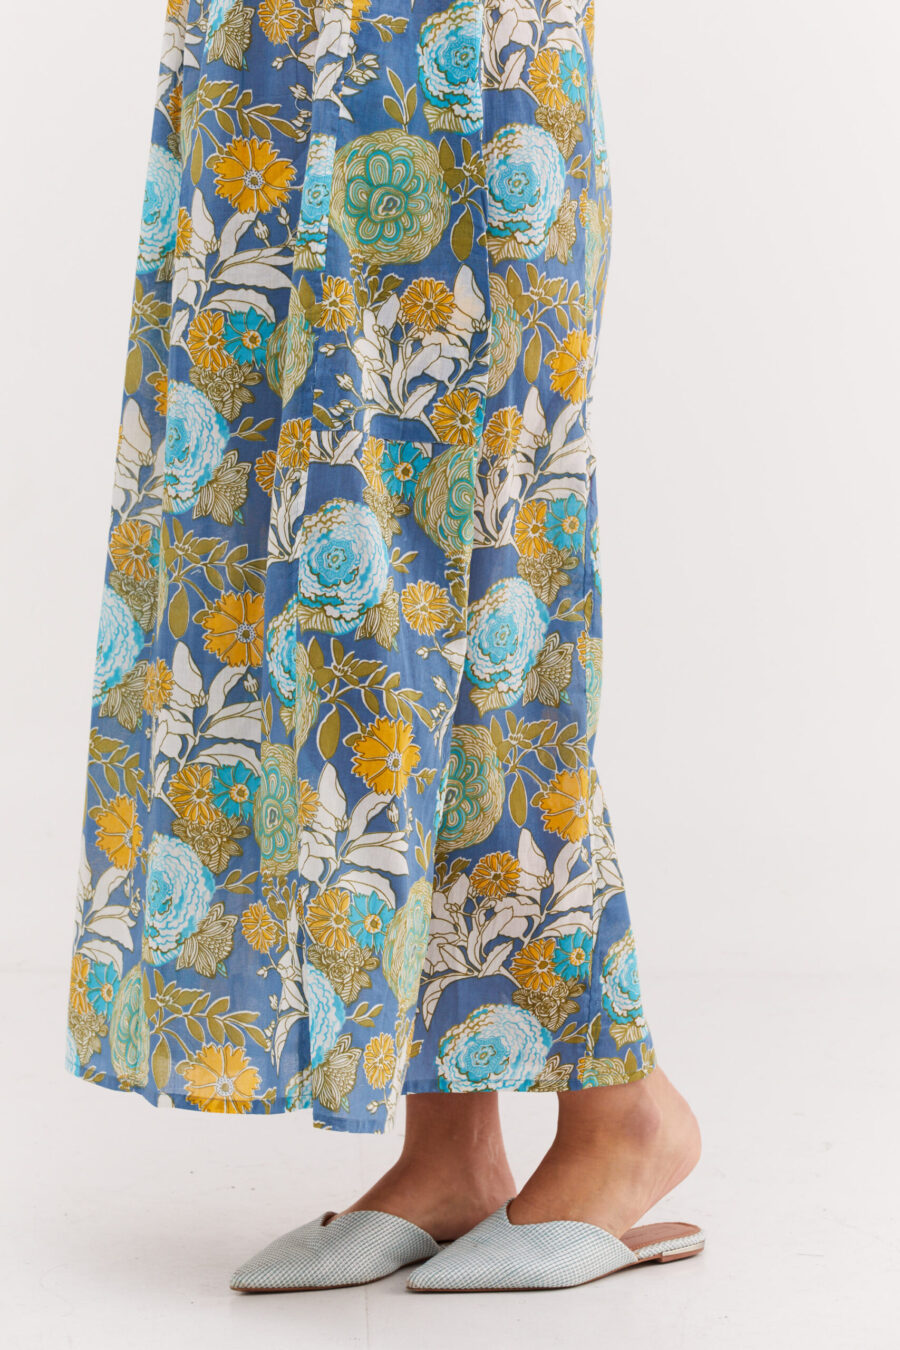 Irit dress | Uniquely designed dress - Blue blossom, colorful floral print on a blue dress by comfort zone boutique